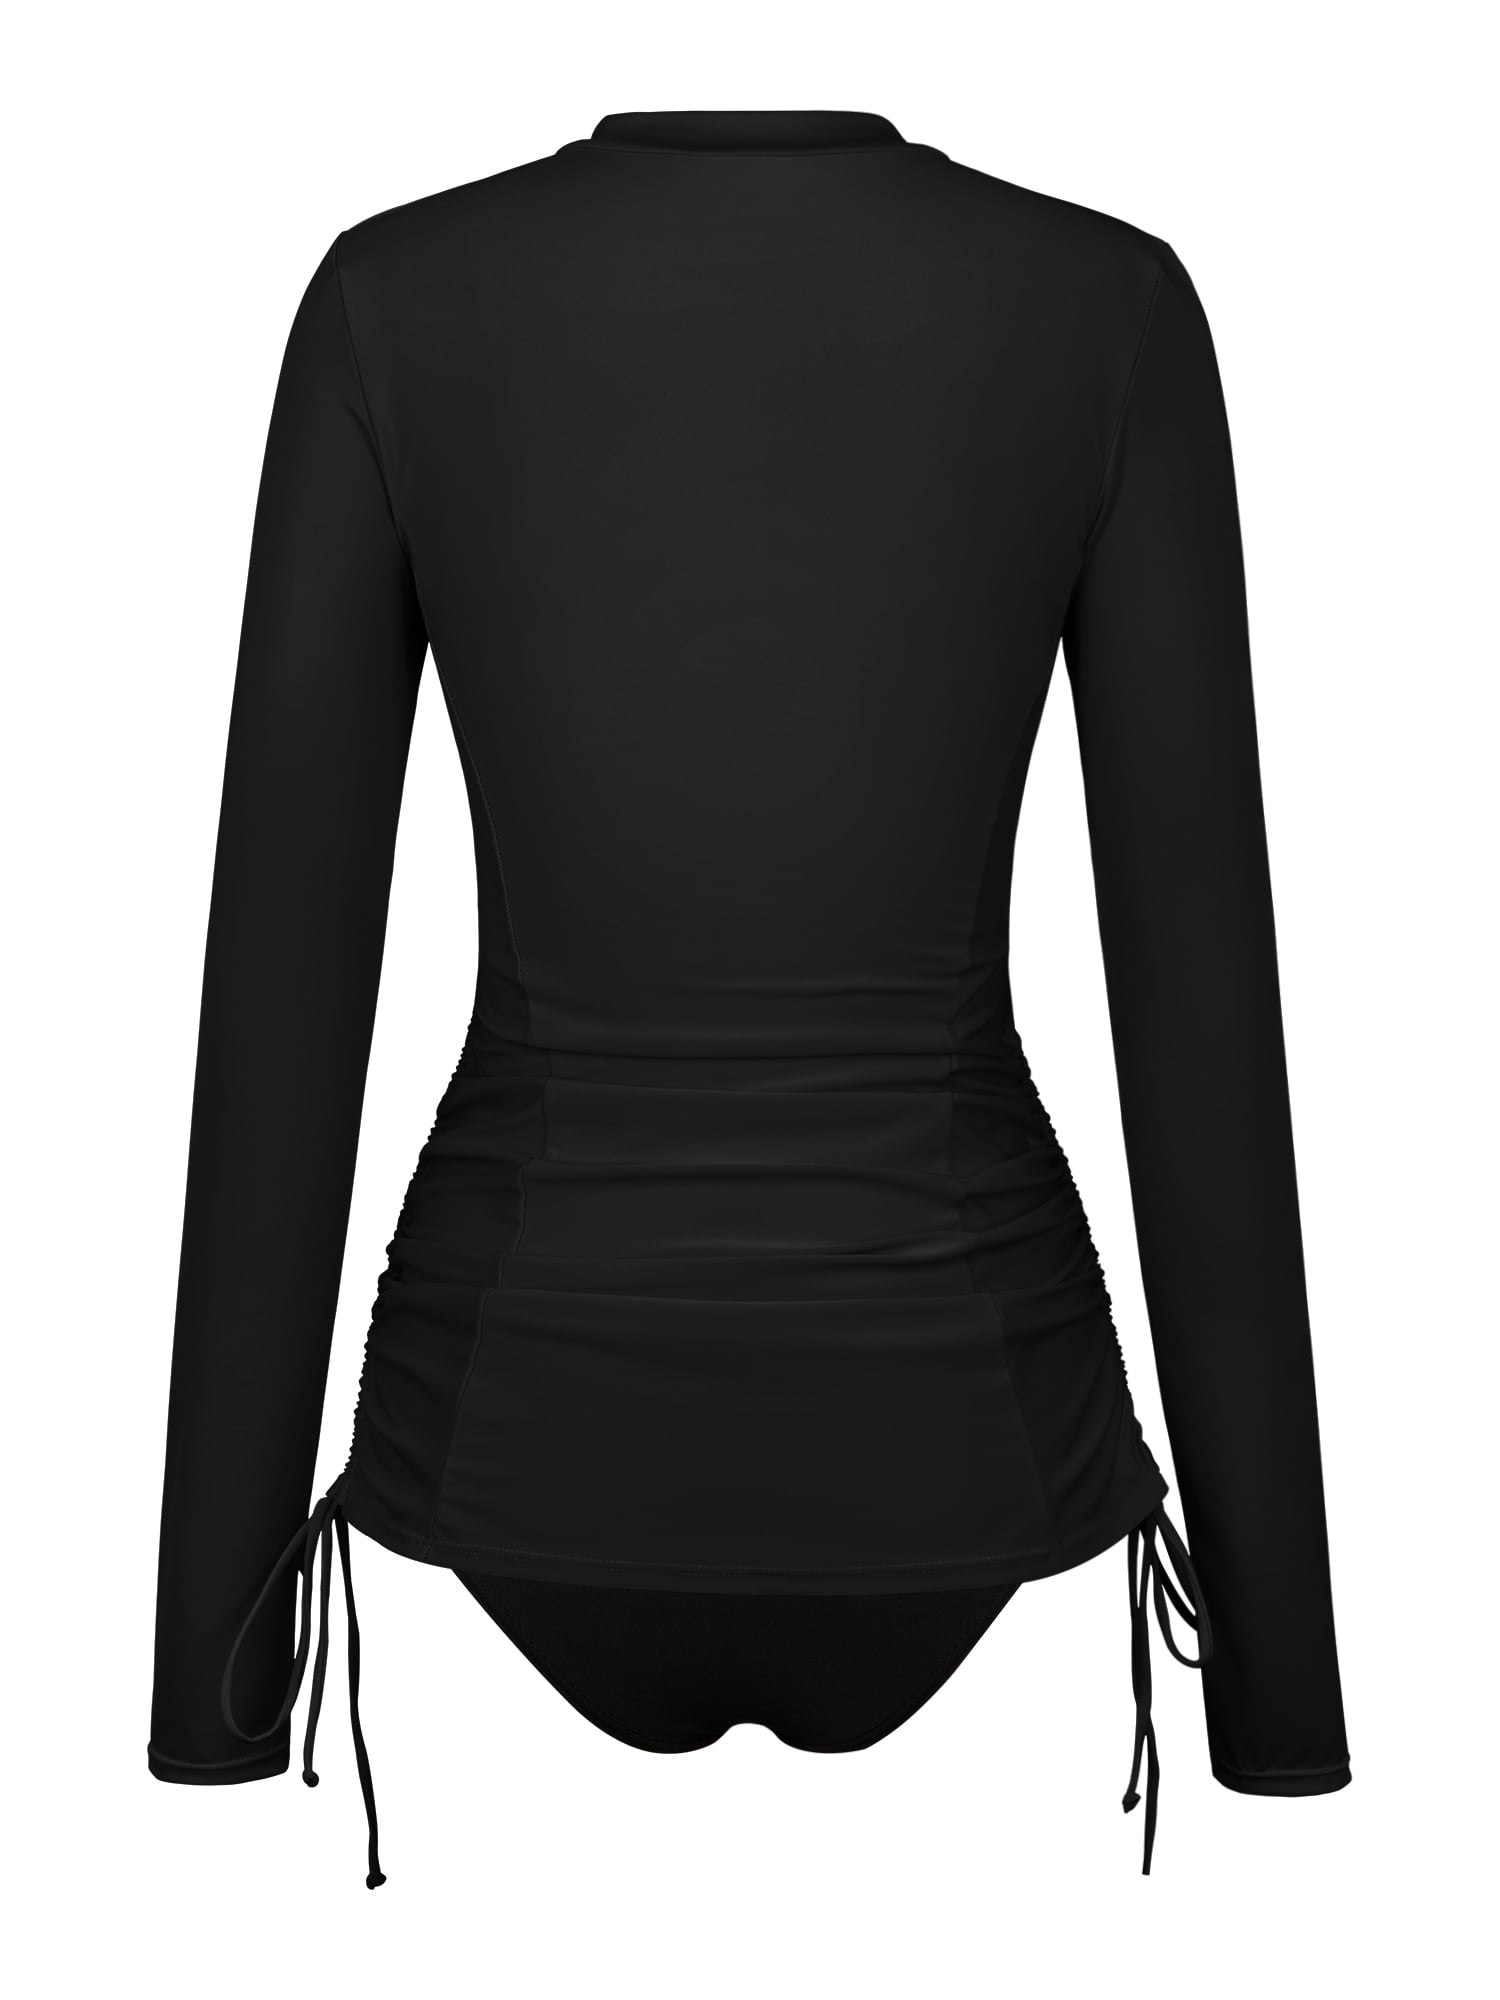  Bonneuitbebe Womens Two Piece Rash Guard Short Sleeve UPF  50+ Swim Shirt Built In Bra Black Bathing Suit